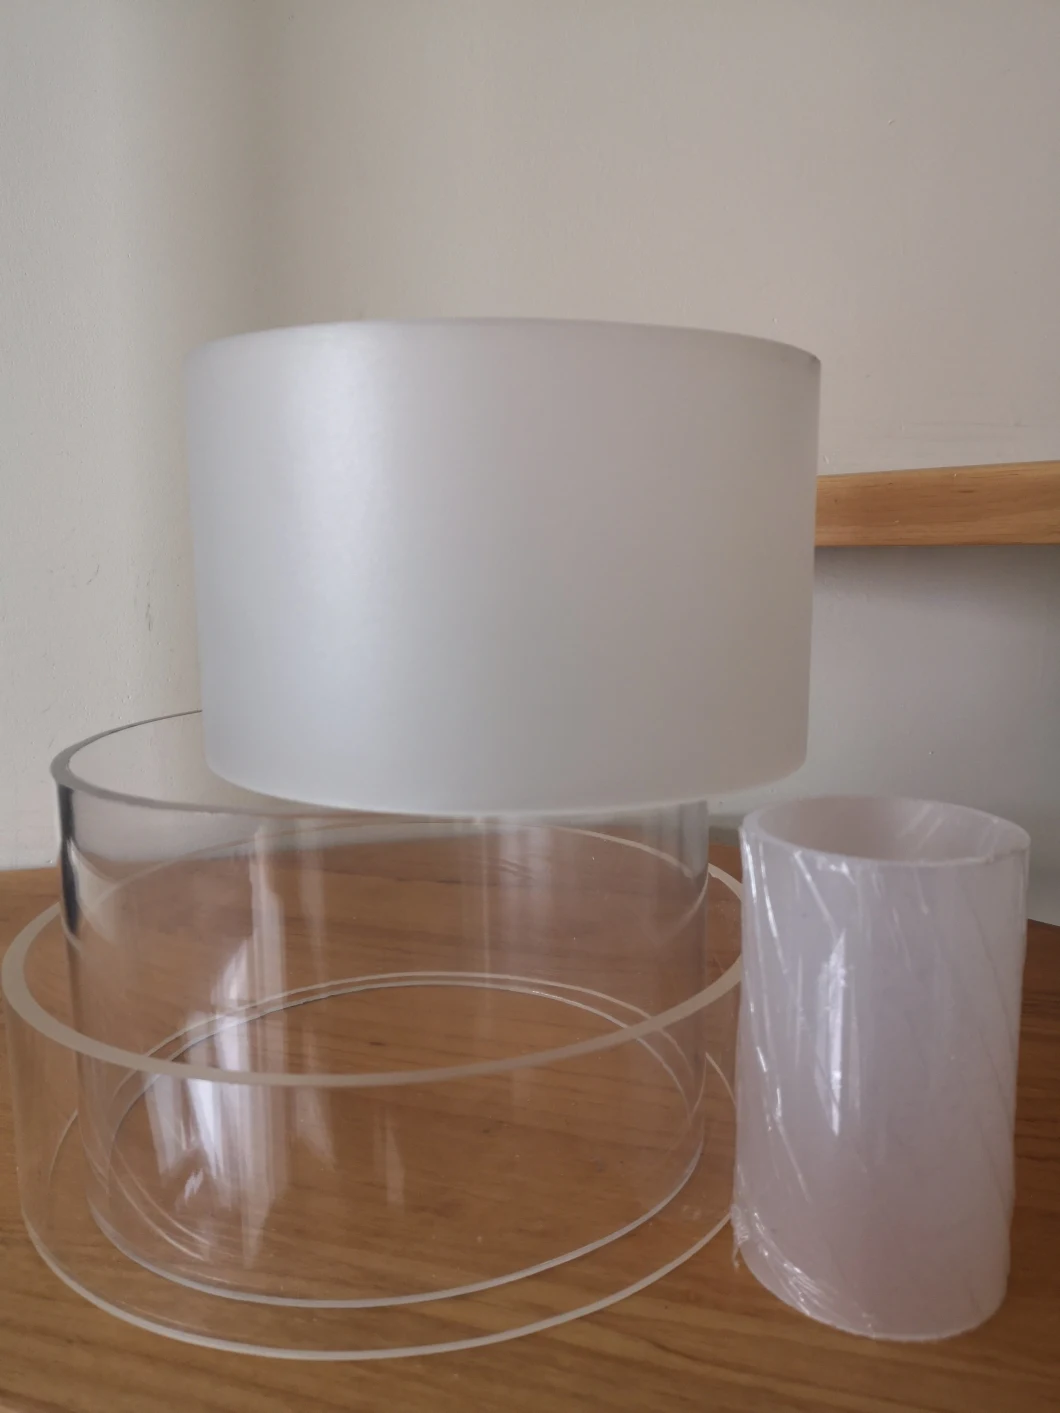 Light Diffusing Plexiglass Tube Milky White Acrylic Tube for Lamp